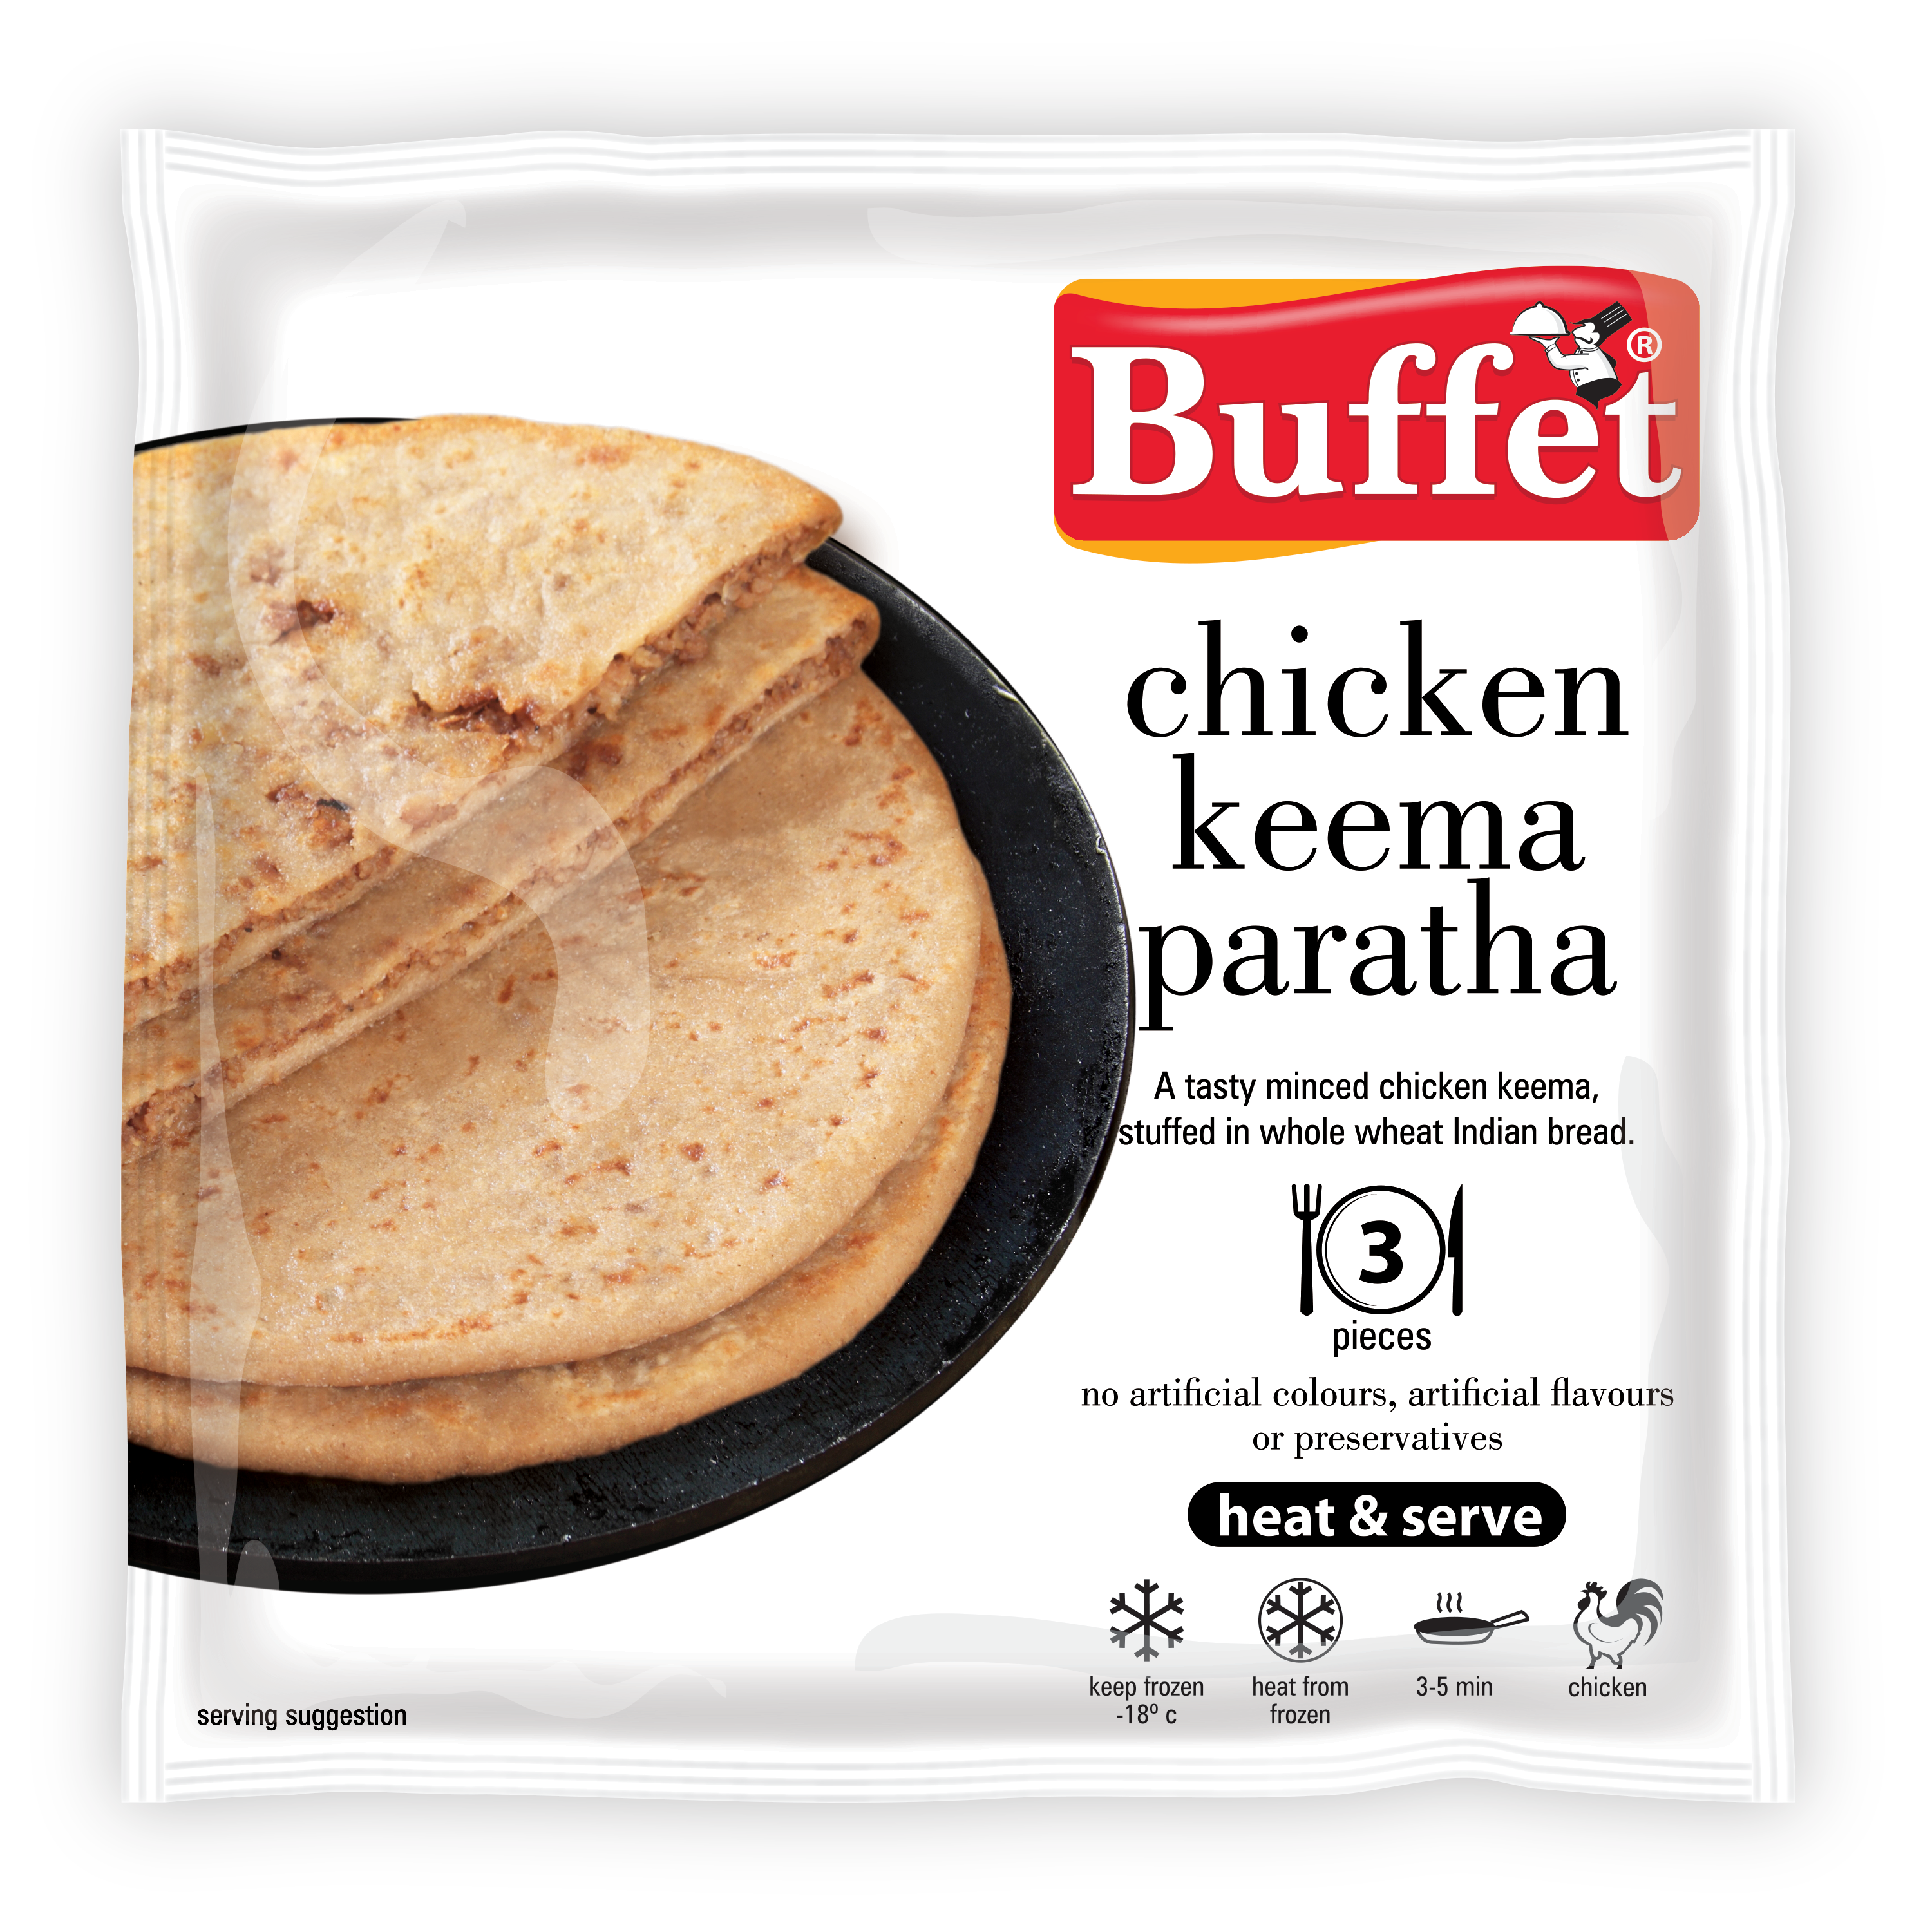 Buffet Chicken Kheema Paratha 400gms - 3 pieces, Heat & Serve